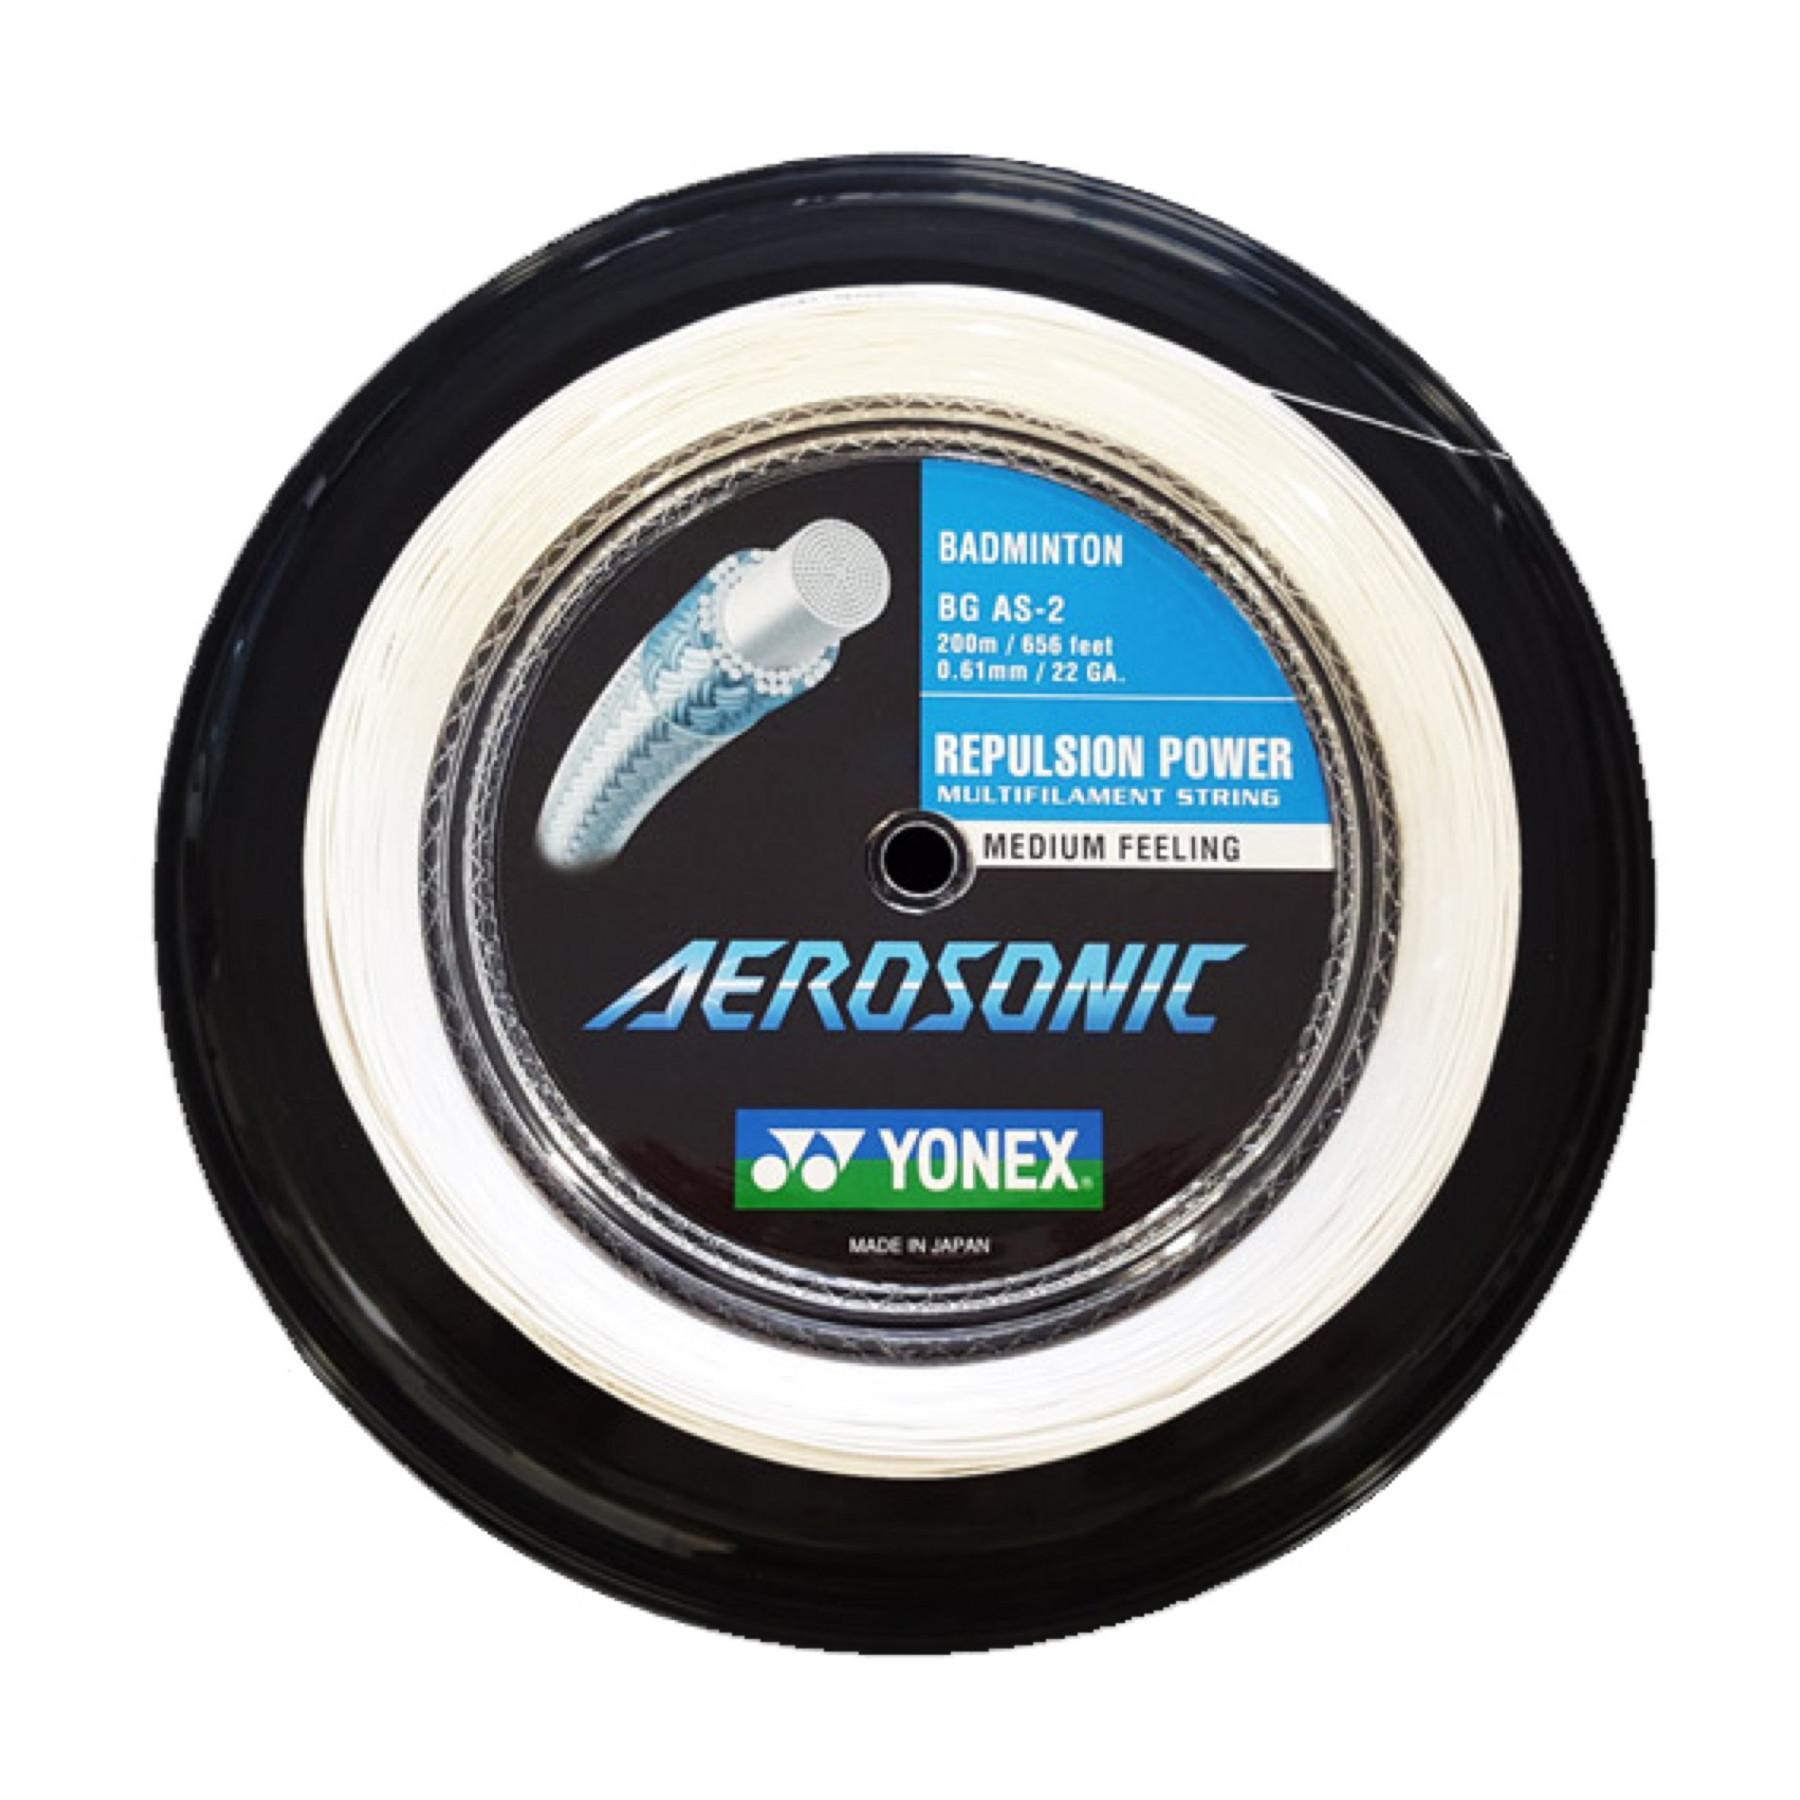 Roller Yonex Aerosonic